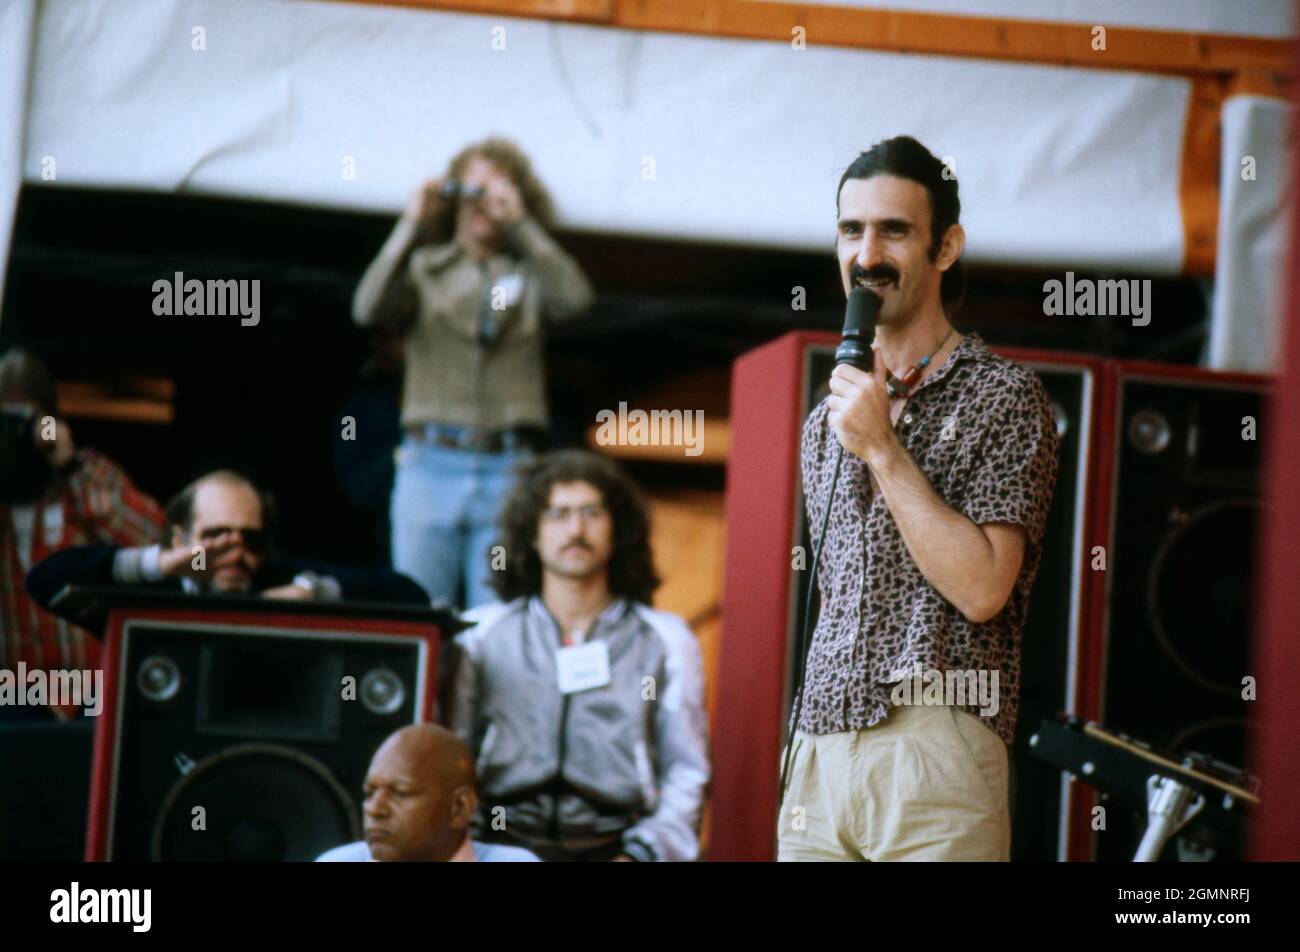 Frank Zappa, amerikanischer Musiker, Gitarrist, spielt Jazzrock, Blues, Avantgarde, Art Rock, hier bei einem Konzert um 1980. Frank Zappa, amerikanischer Musiker, Gitarrist, spielt Jazz-Rock, Blues, Avantgarde, Art Rock, hier eine Bühne bei einem Konzert um 1980. Stockfoto